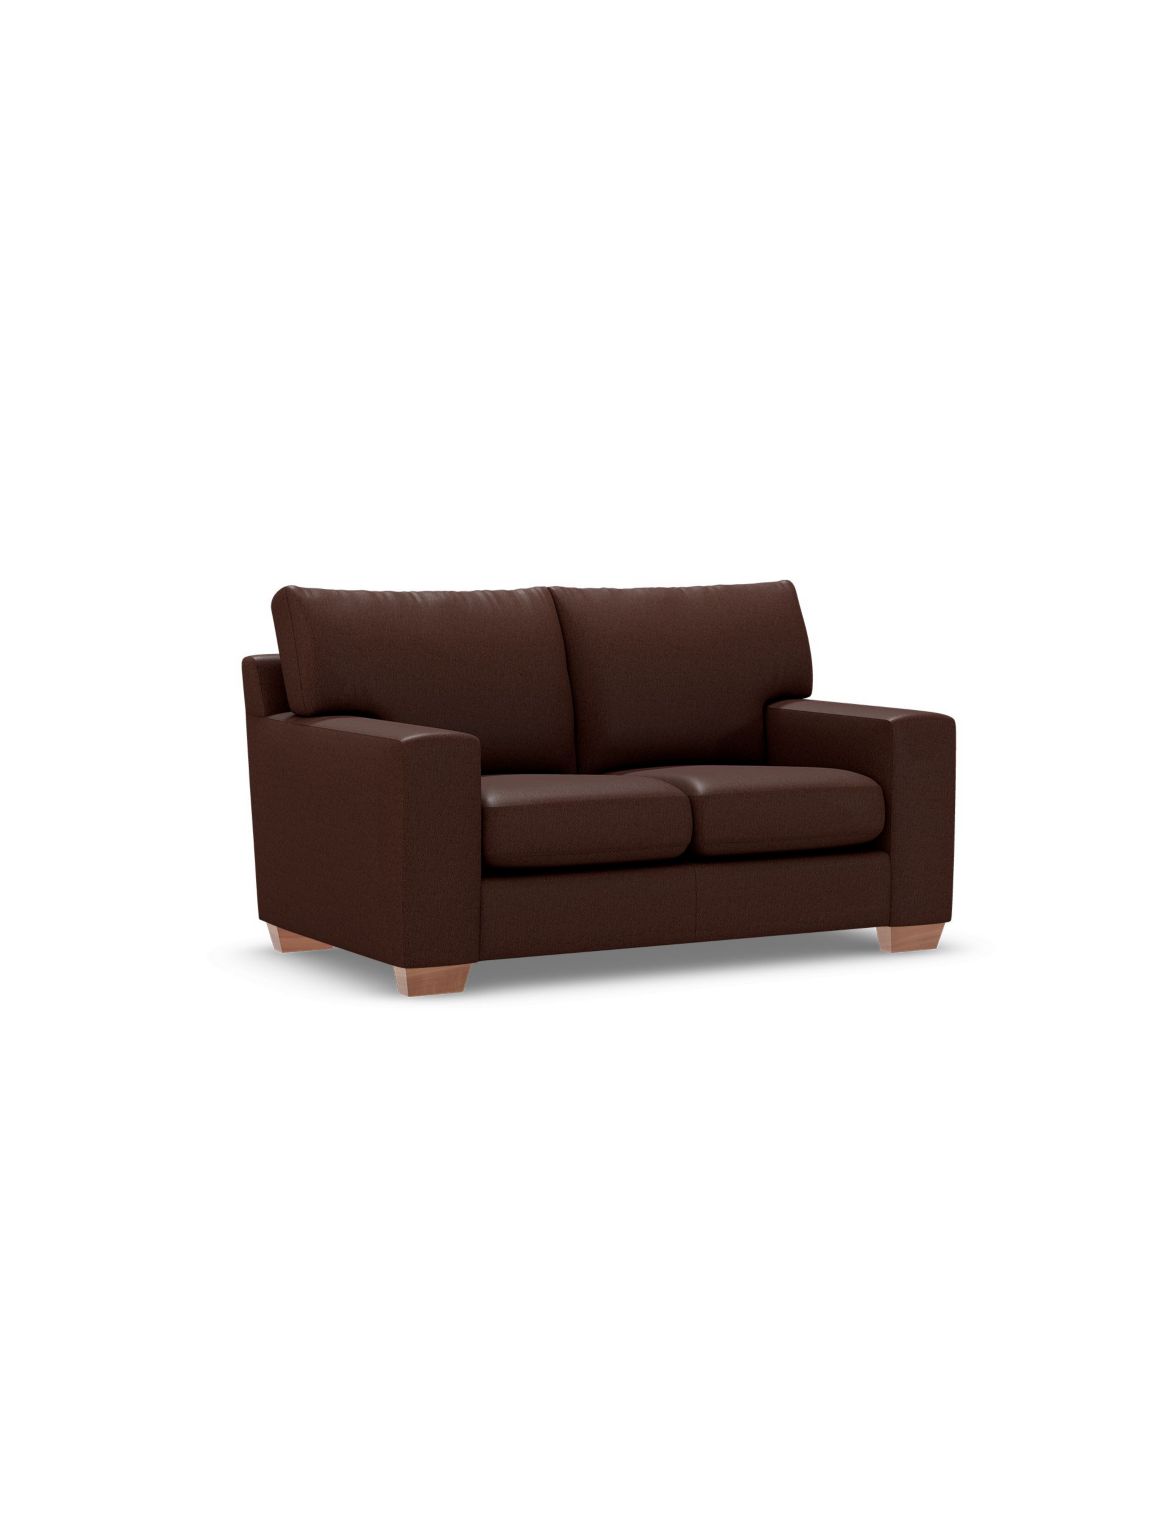 Alfie Compact Sofa brown